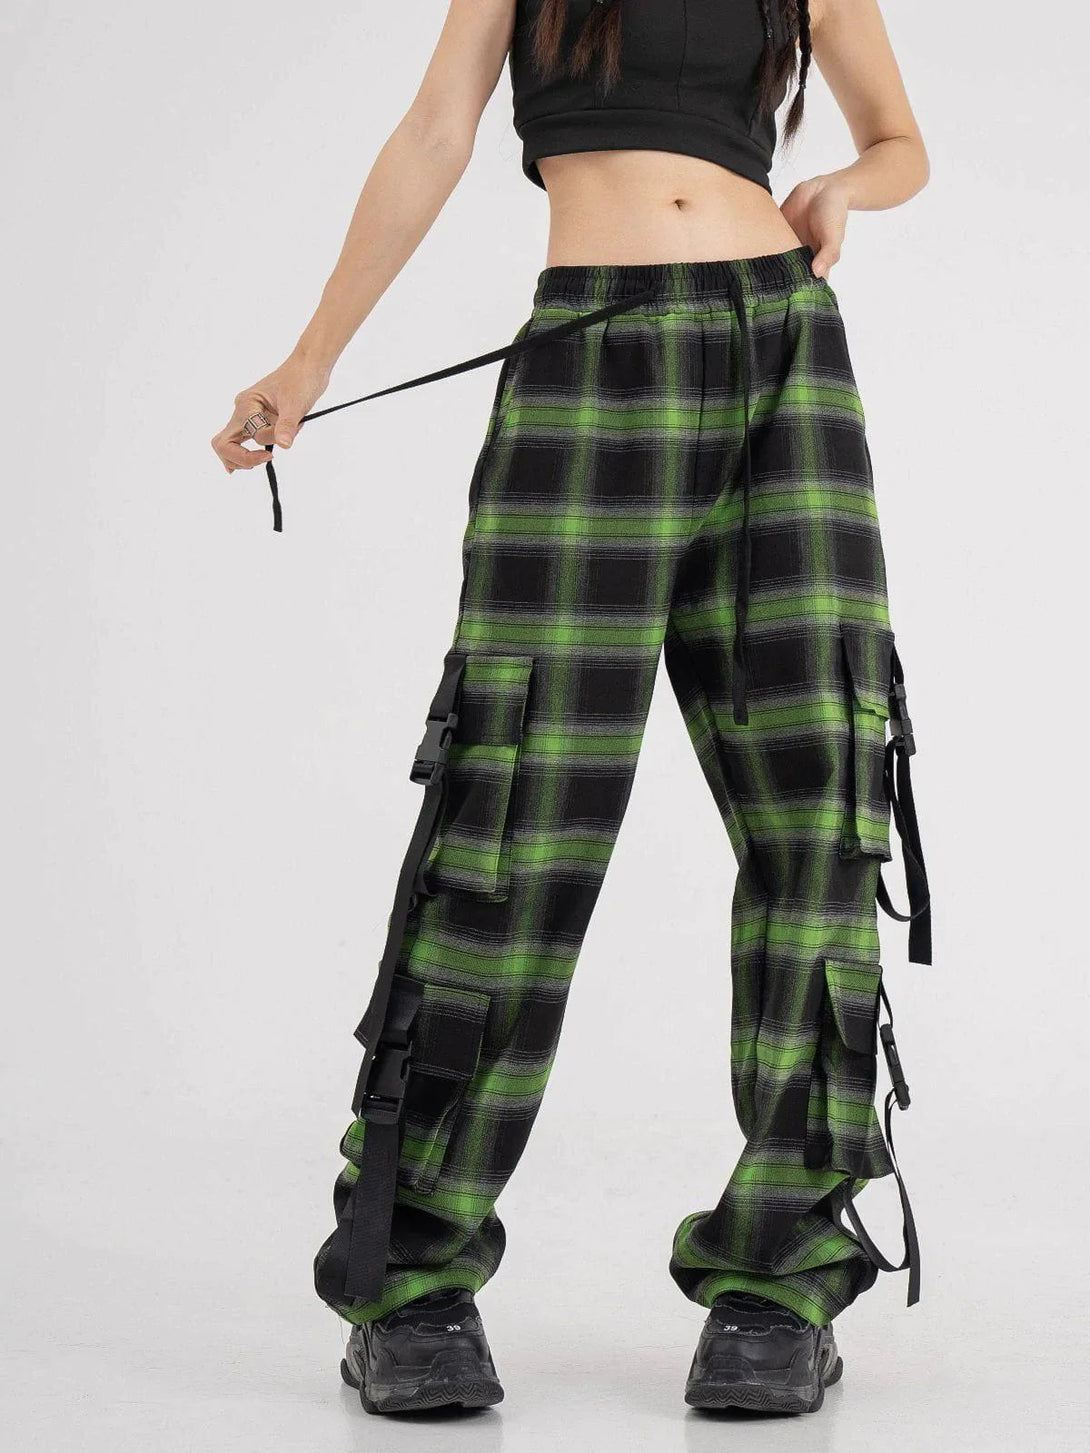 Majesda® - Multi-Pocket Streamer Pants outfit ideas streetwear fashion